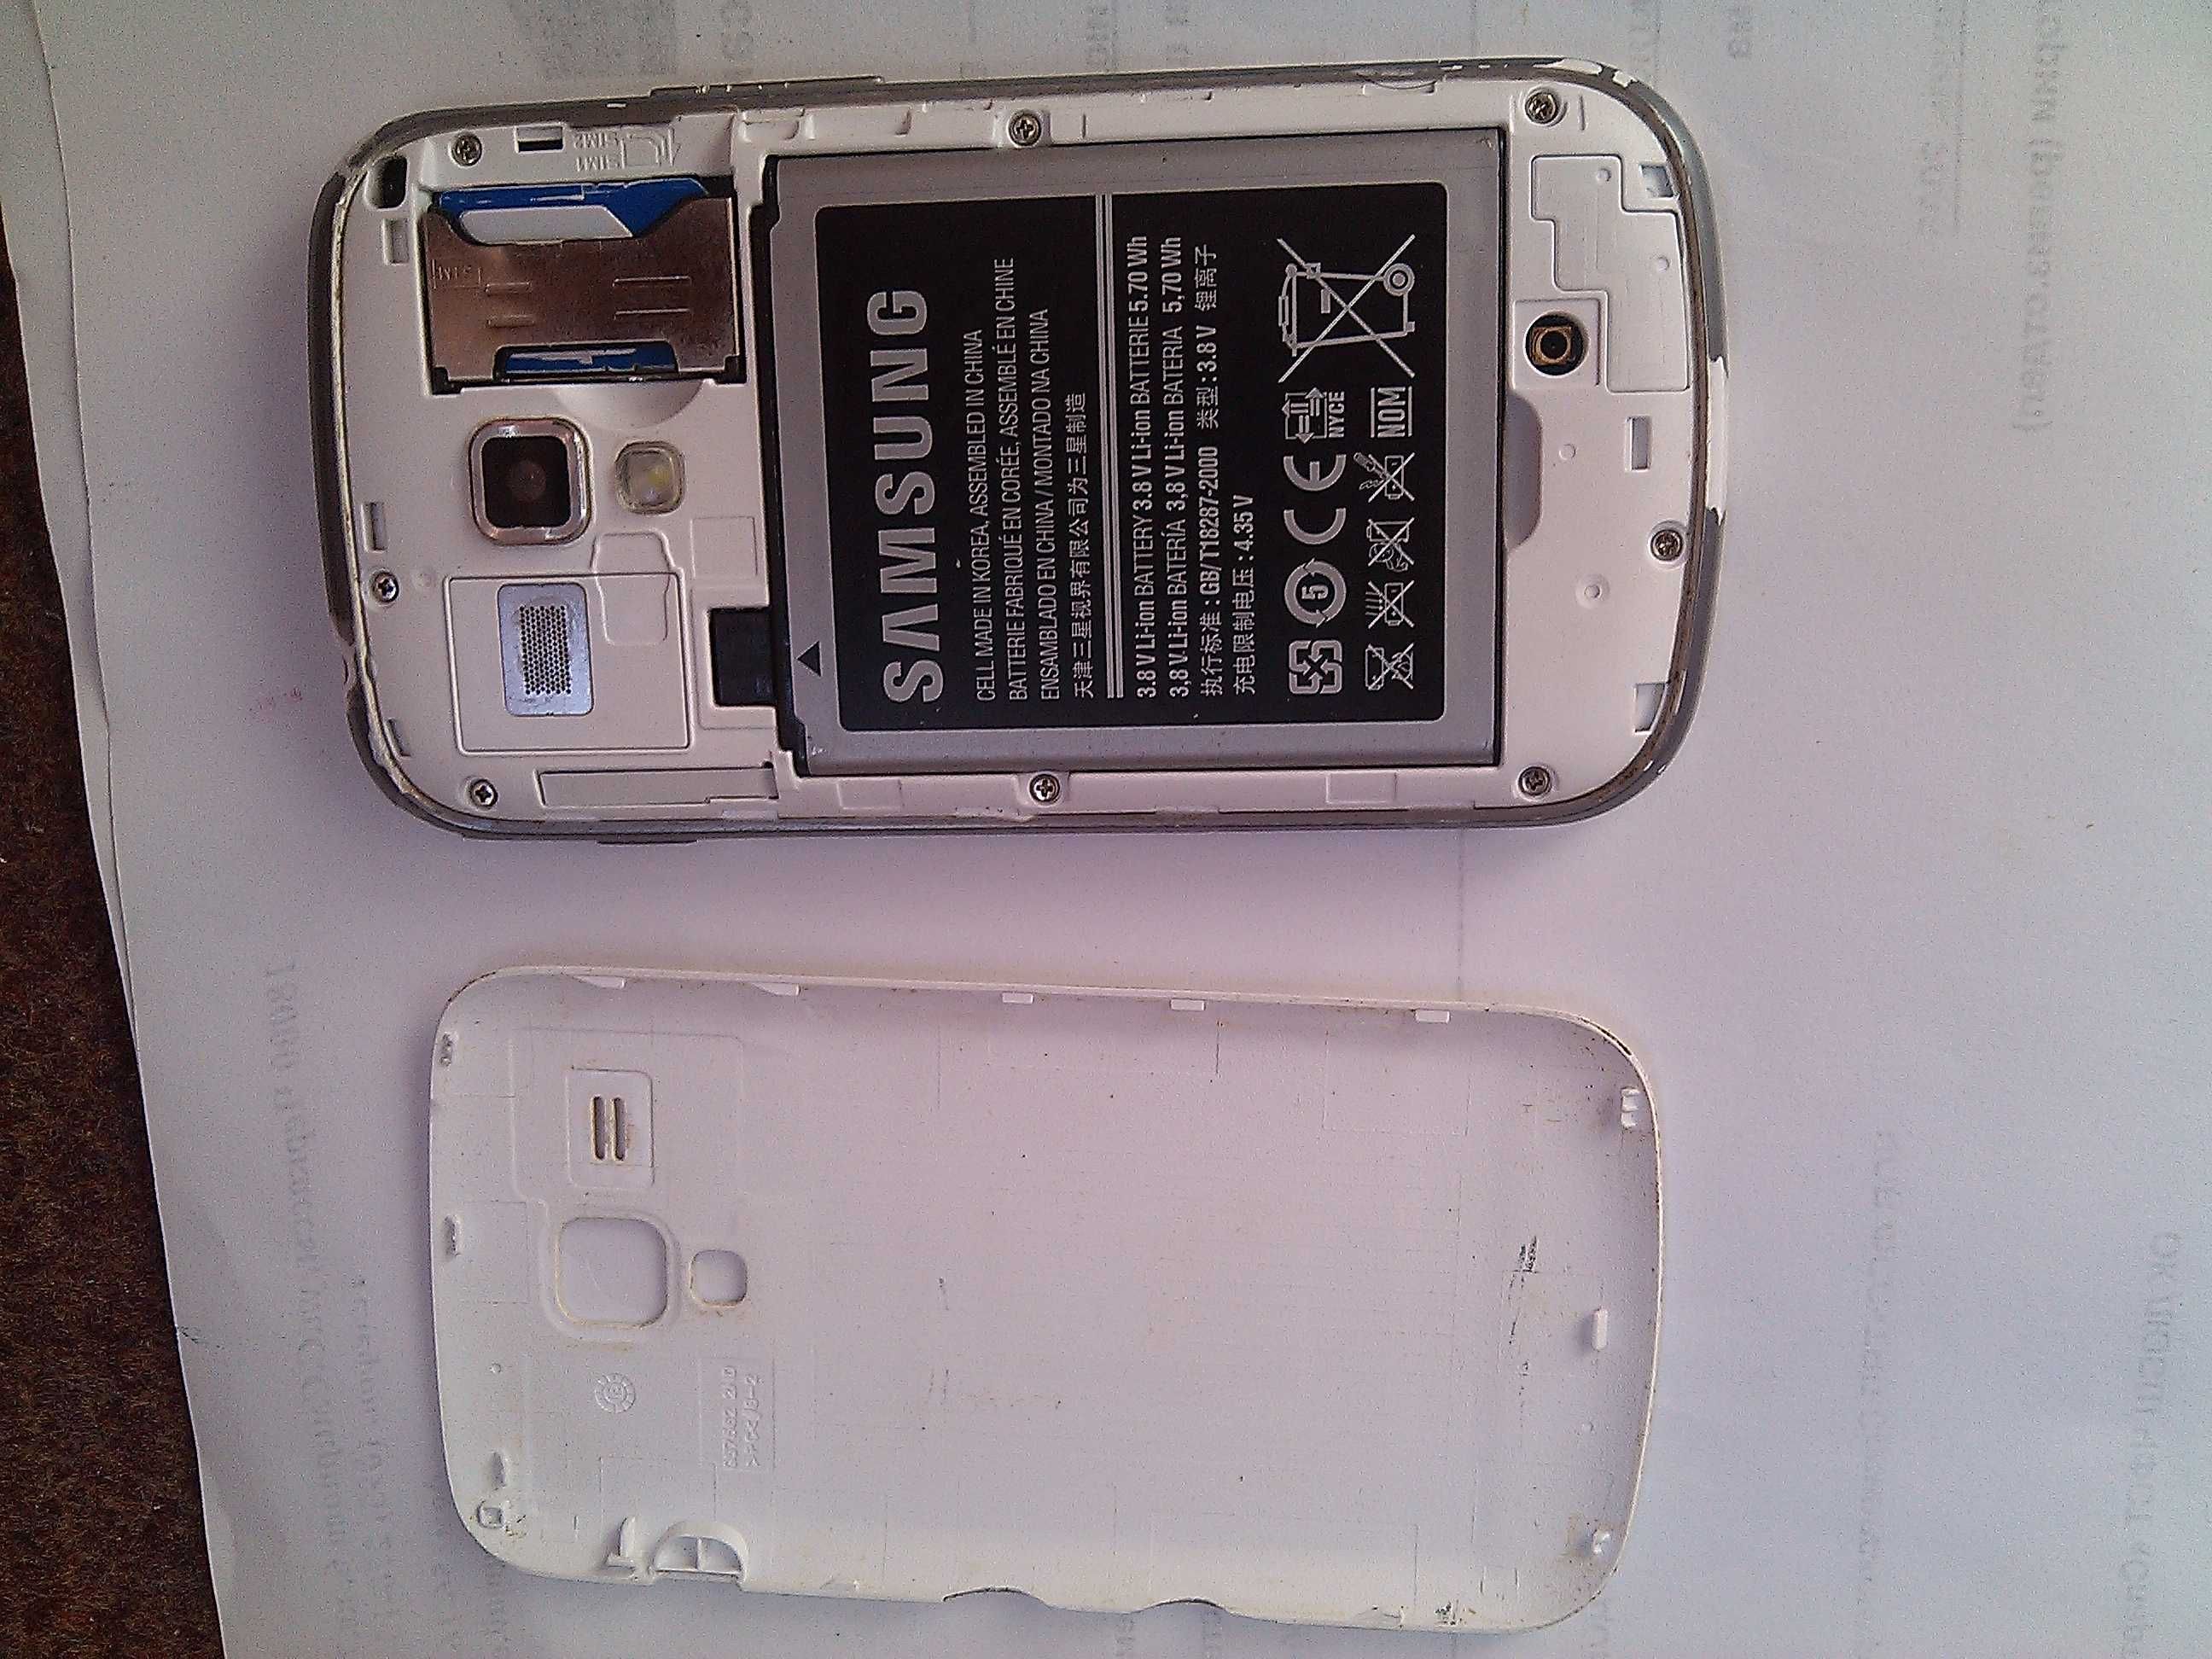 Смартфон Samsung GT-S7562